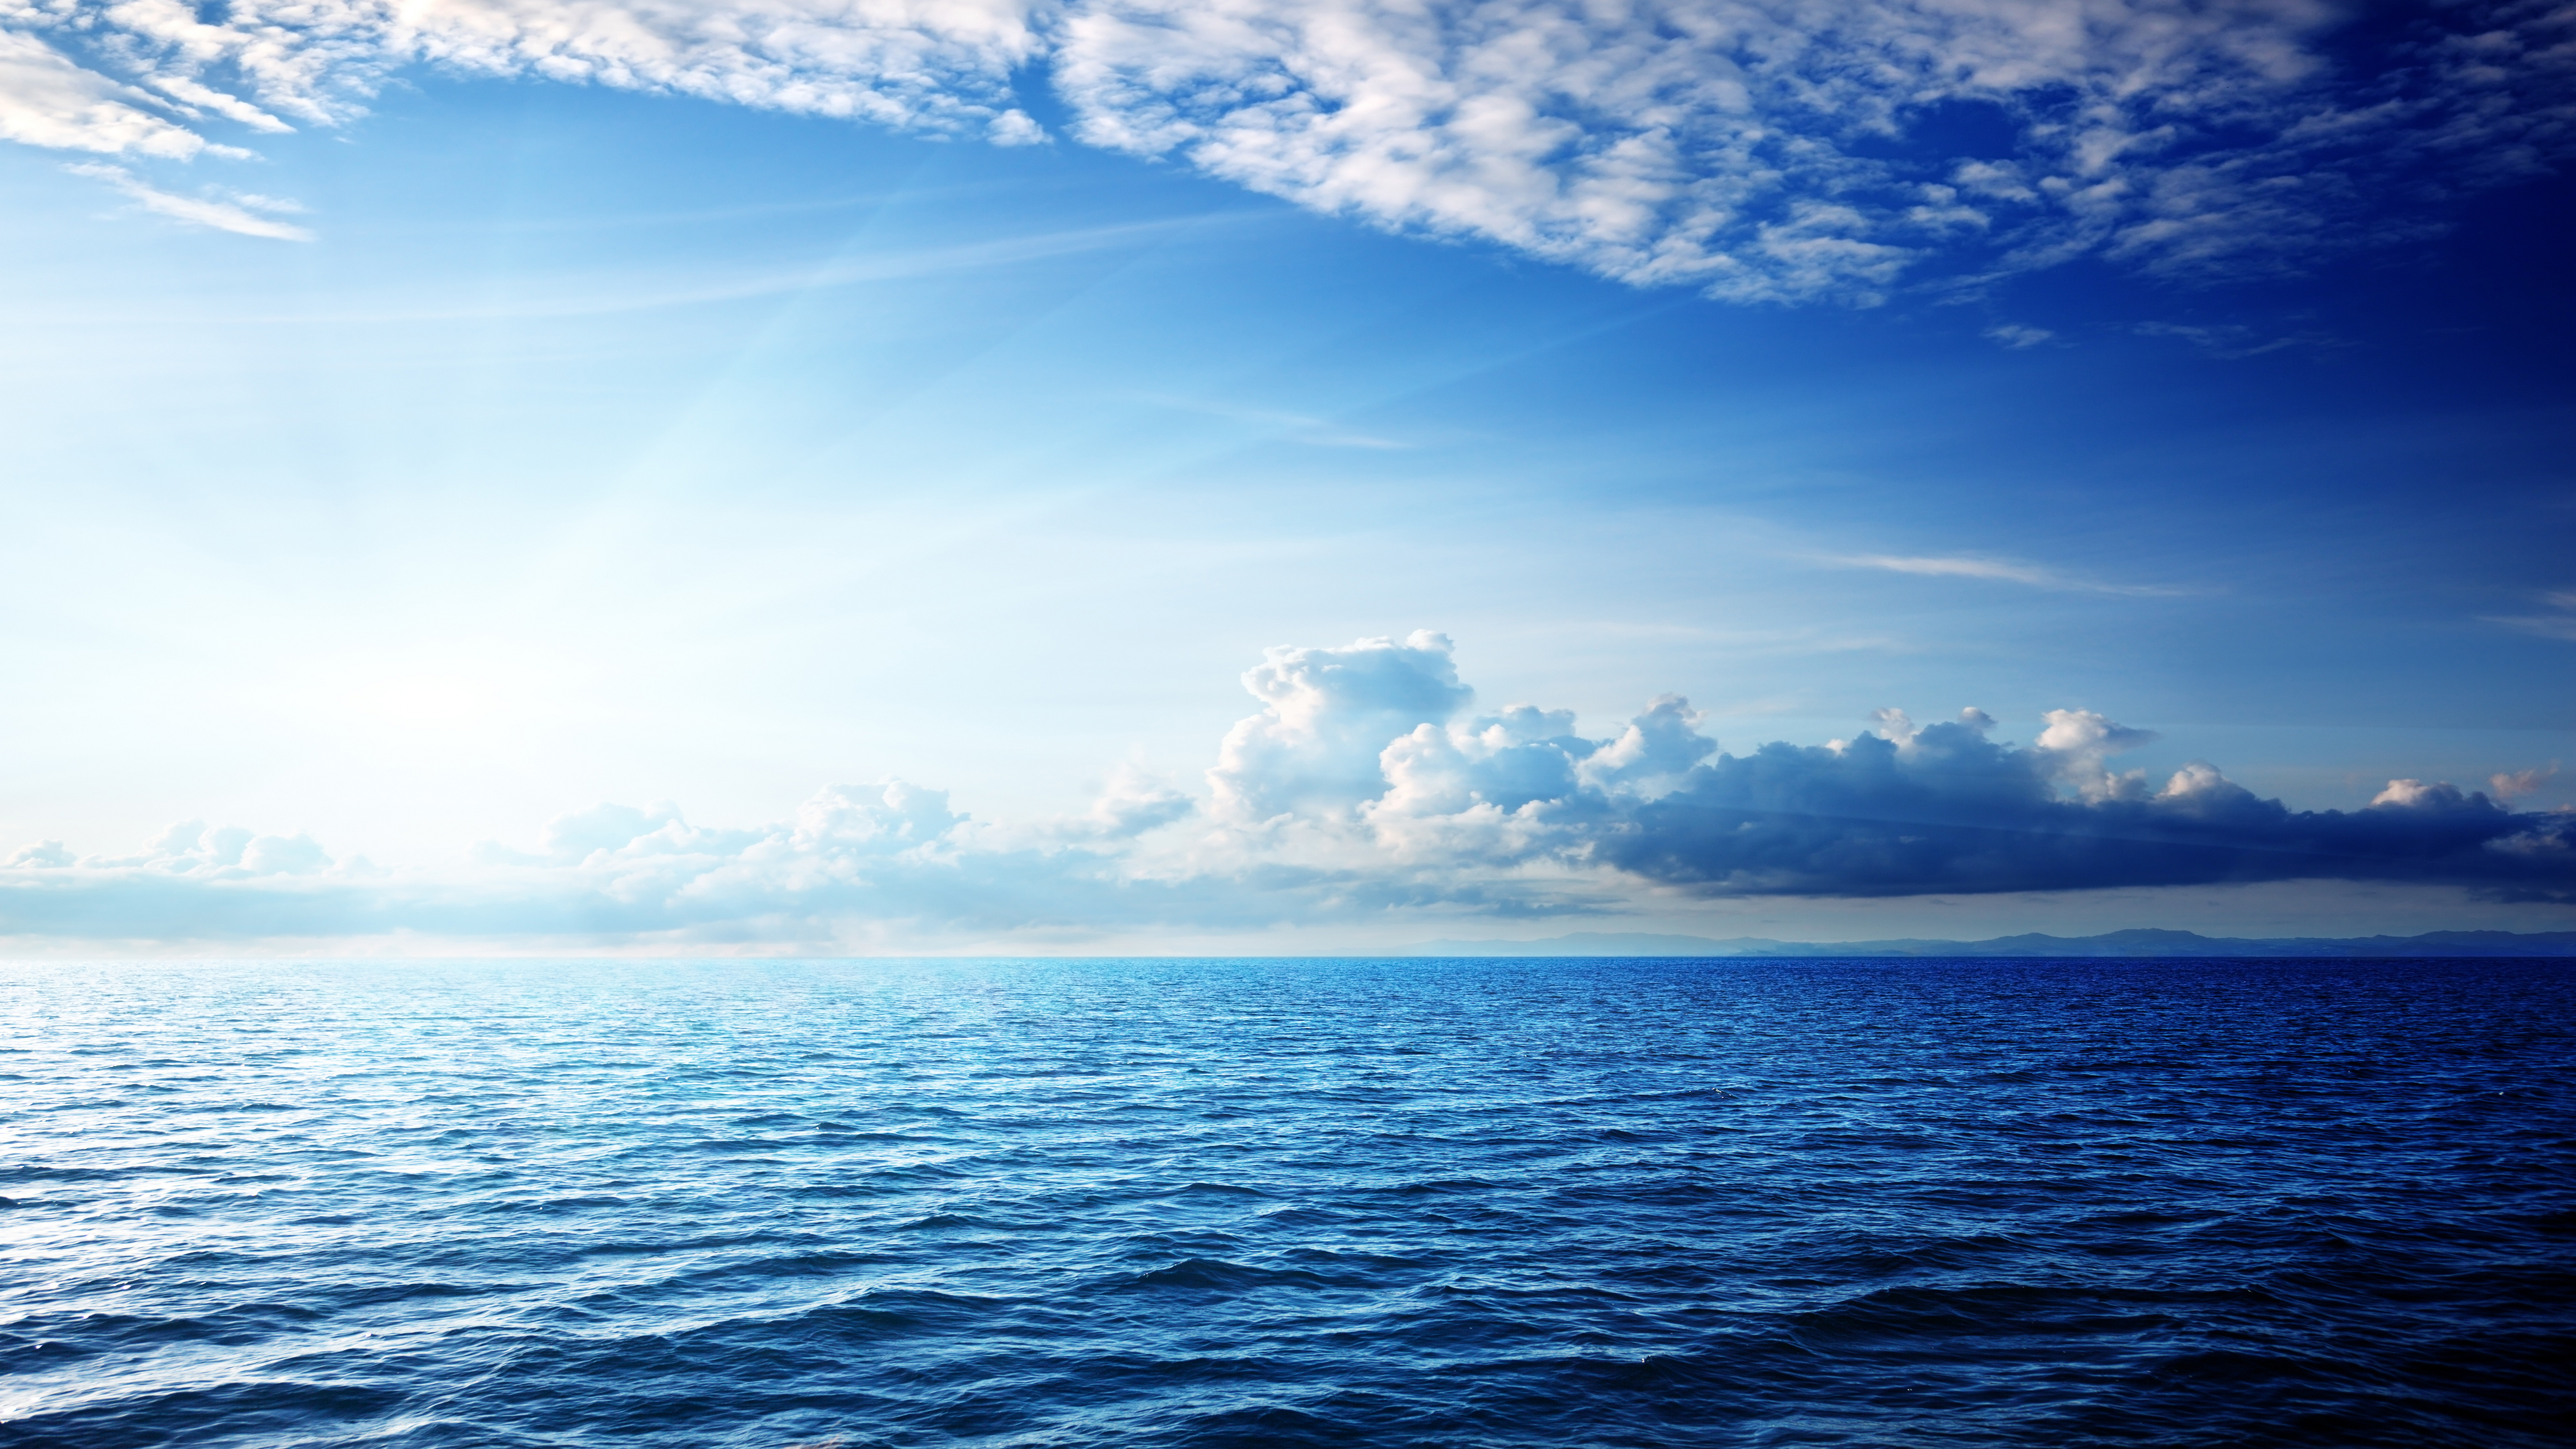 Обои Море, 5k, 4k, океан, небо, облака, Sea, 5k, 4k wallpaper, ocean, sky,  clouds, Природа #5257